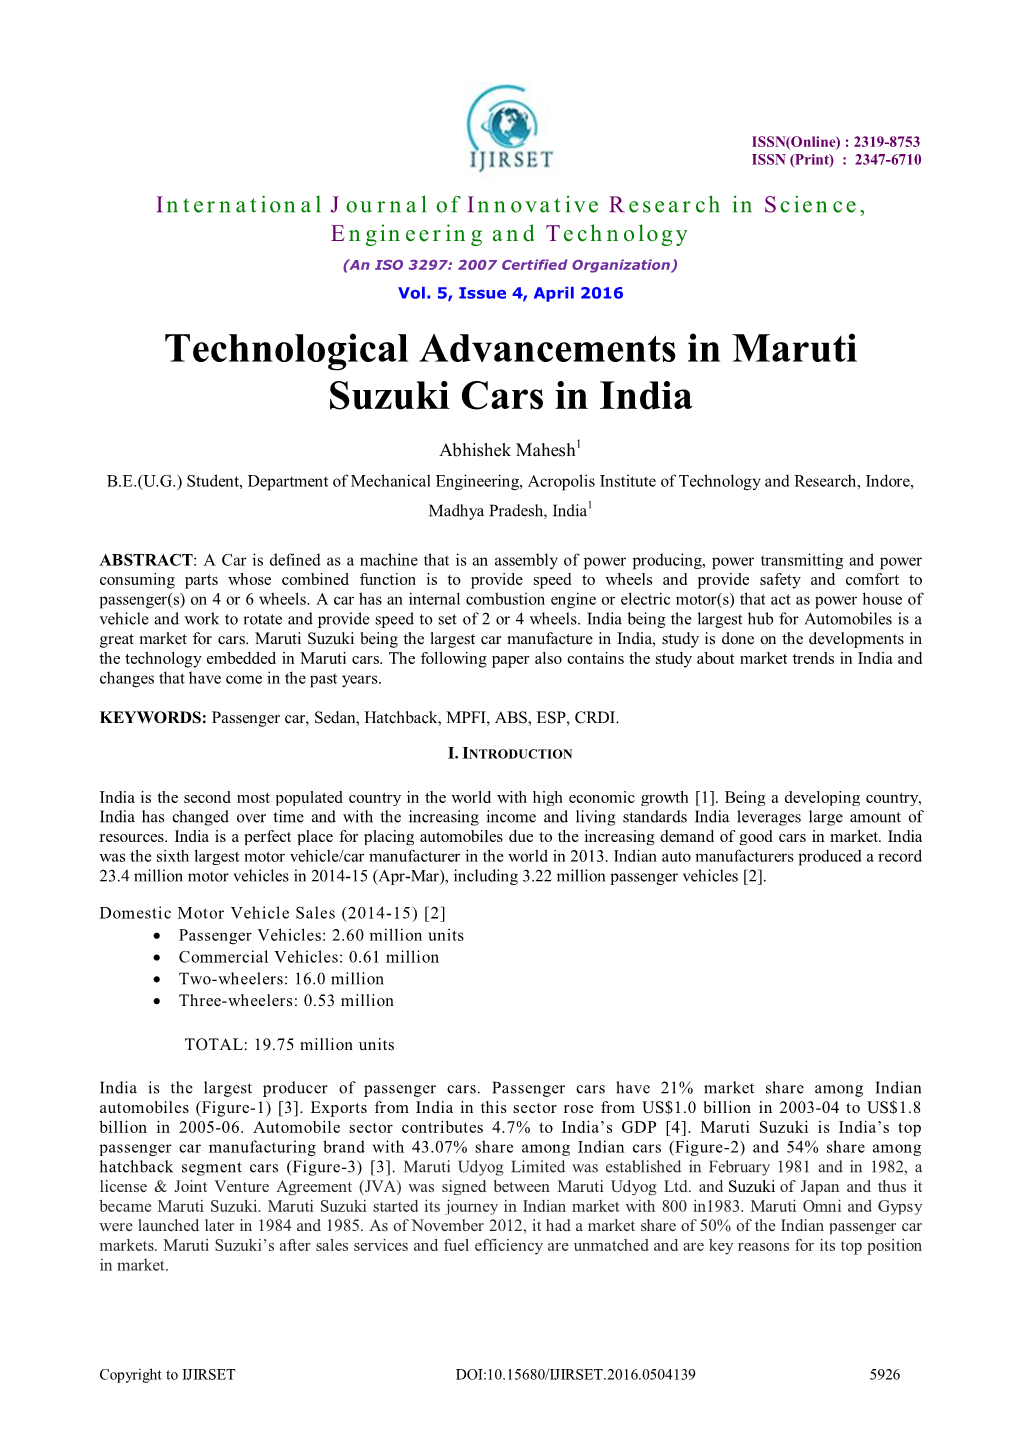 Technological Advancements in Maruti Suzuki Cars in India